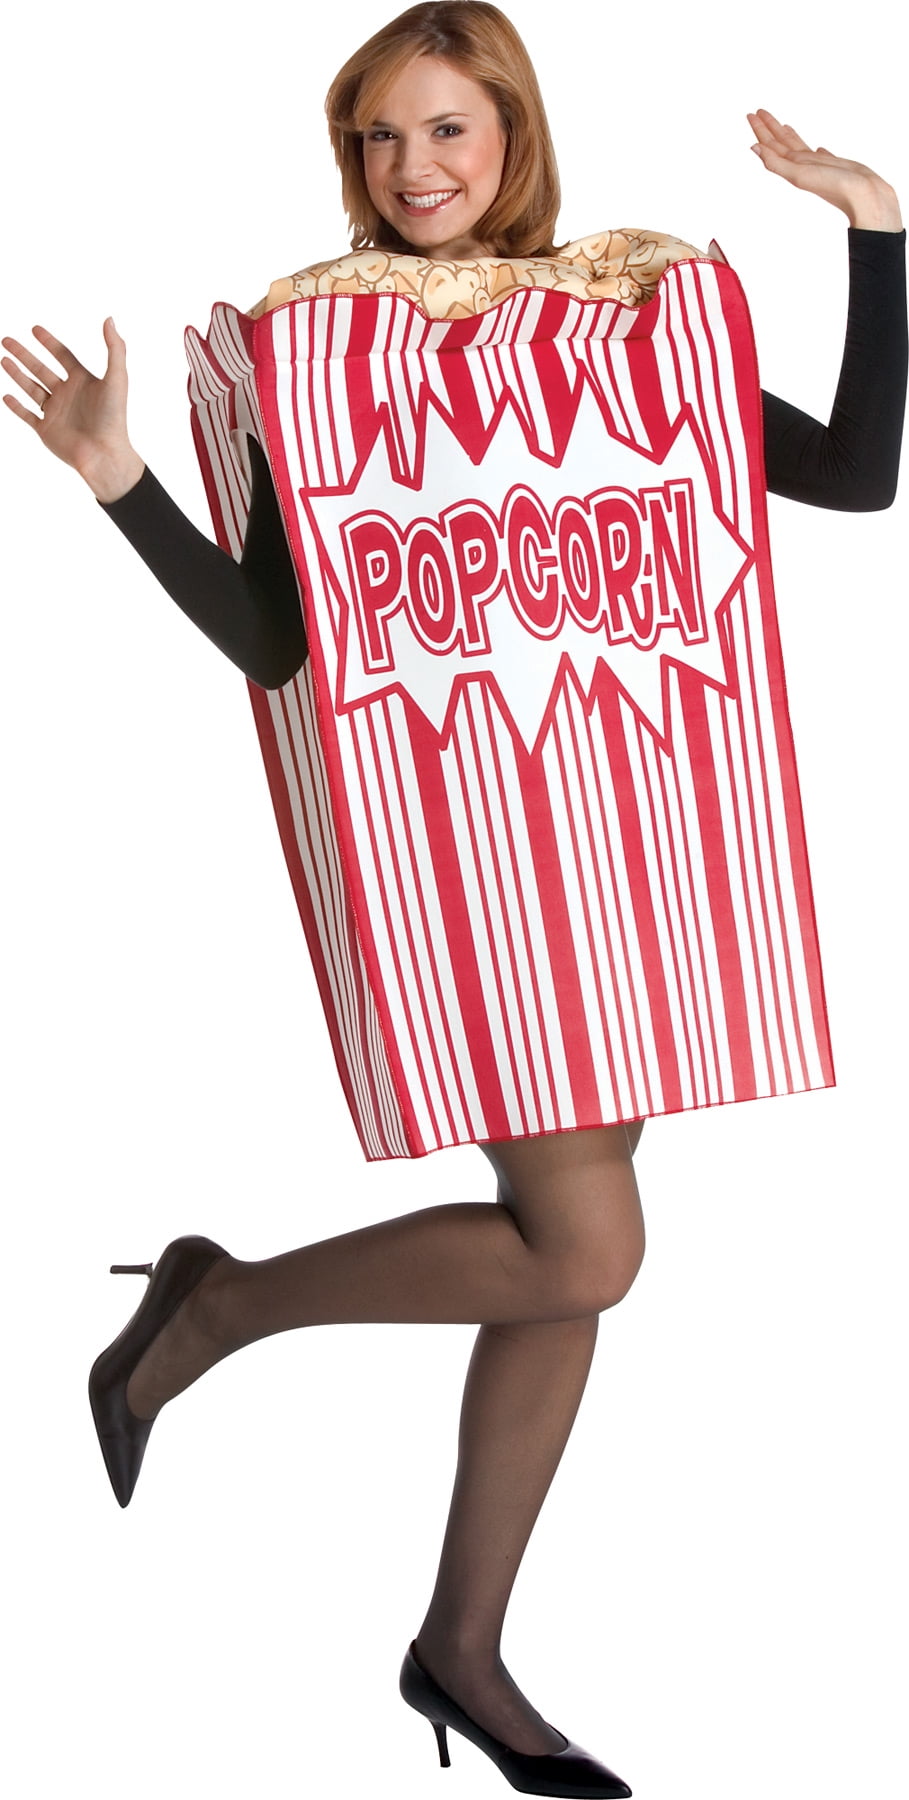 diy popcorn costume